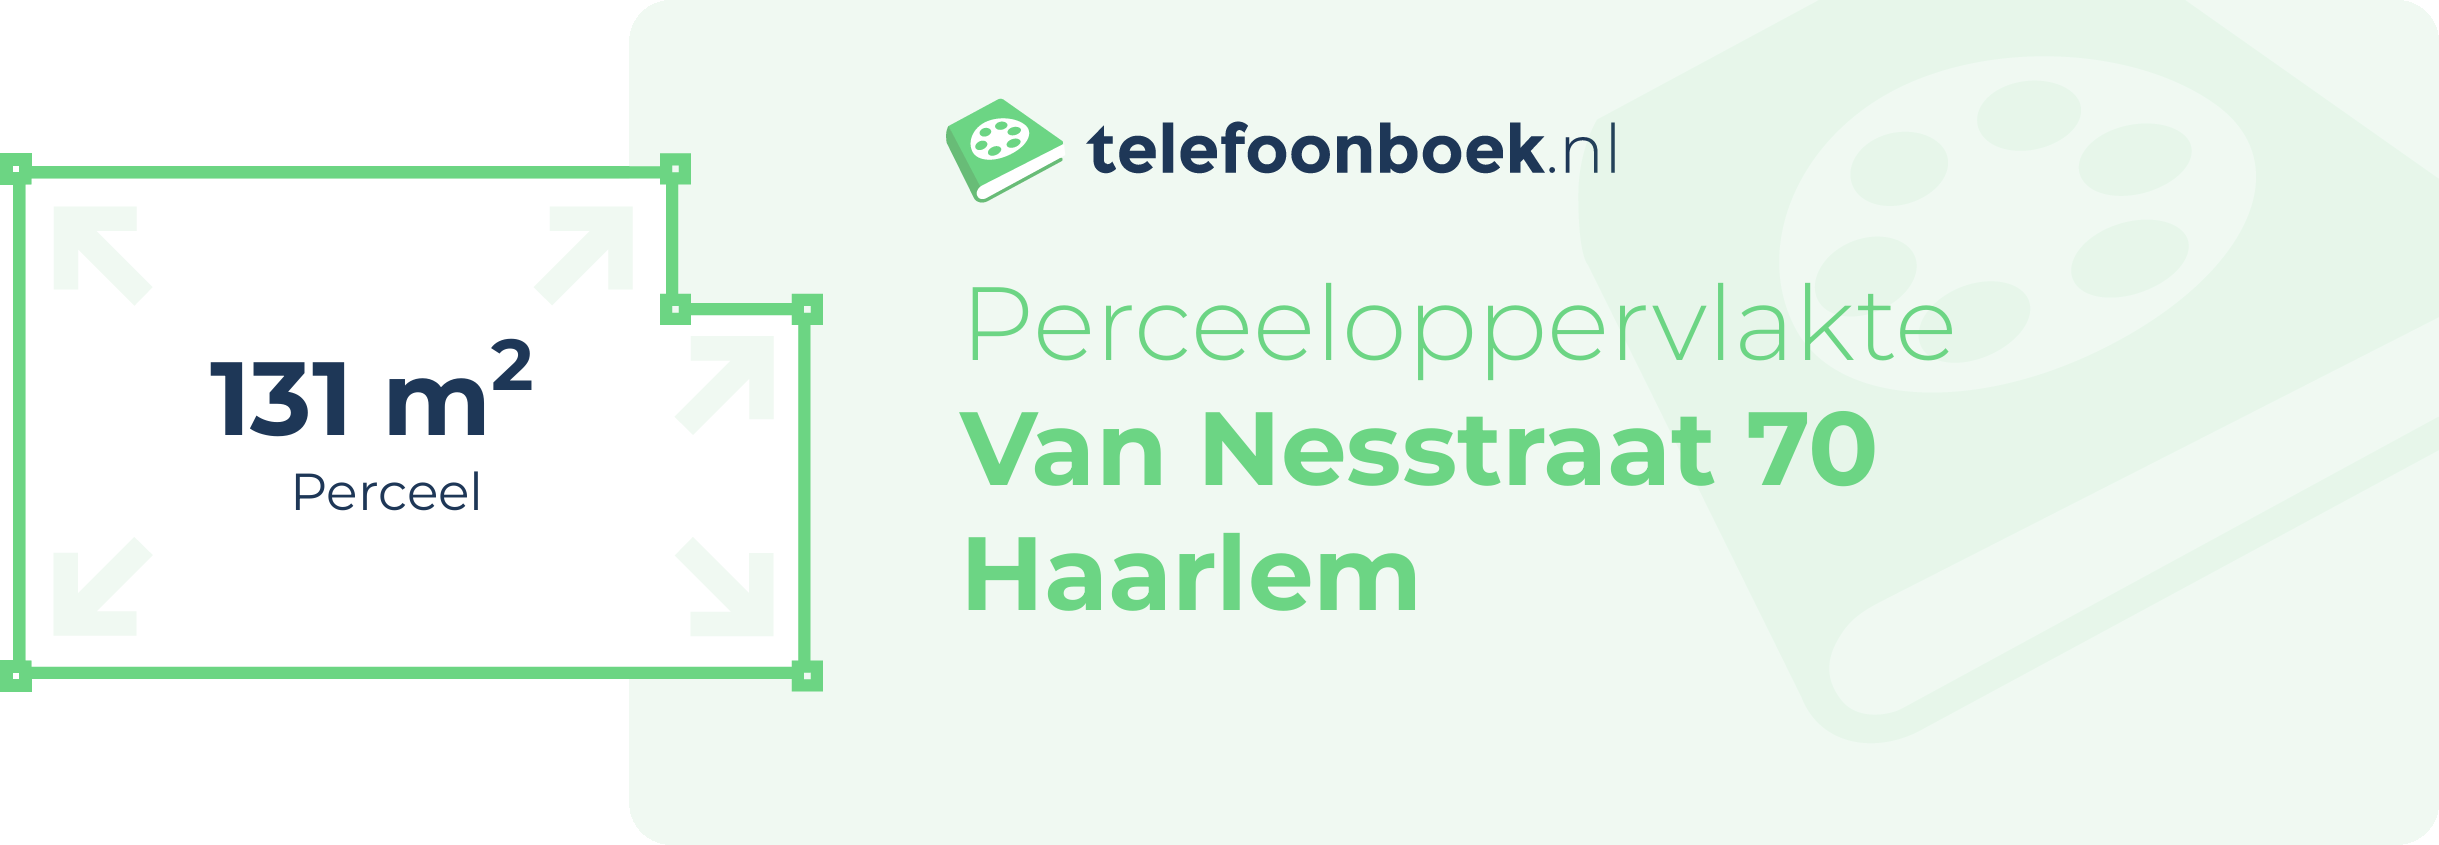 Perceeloppervlakte Van Nesstraat 70 Haarlem